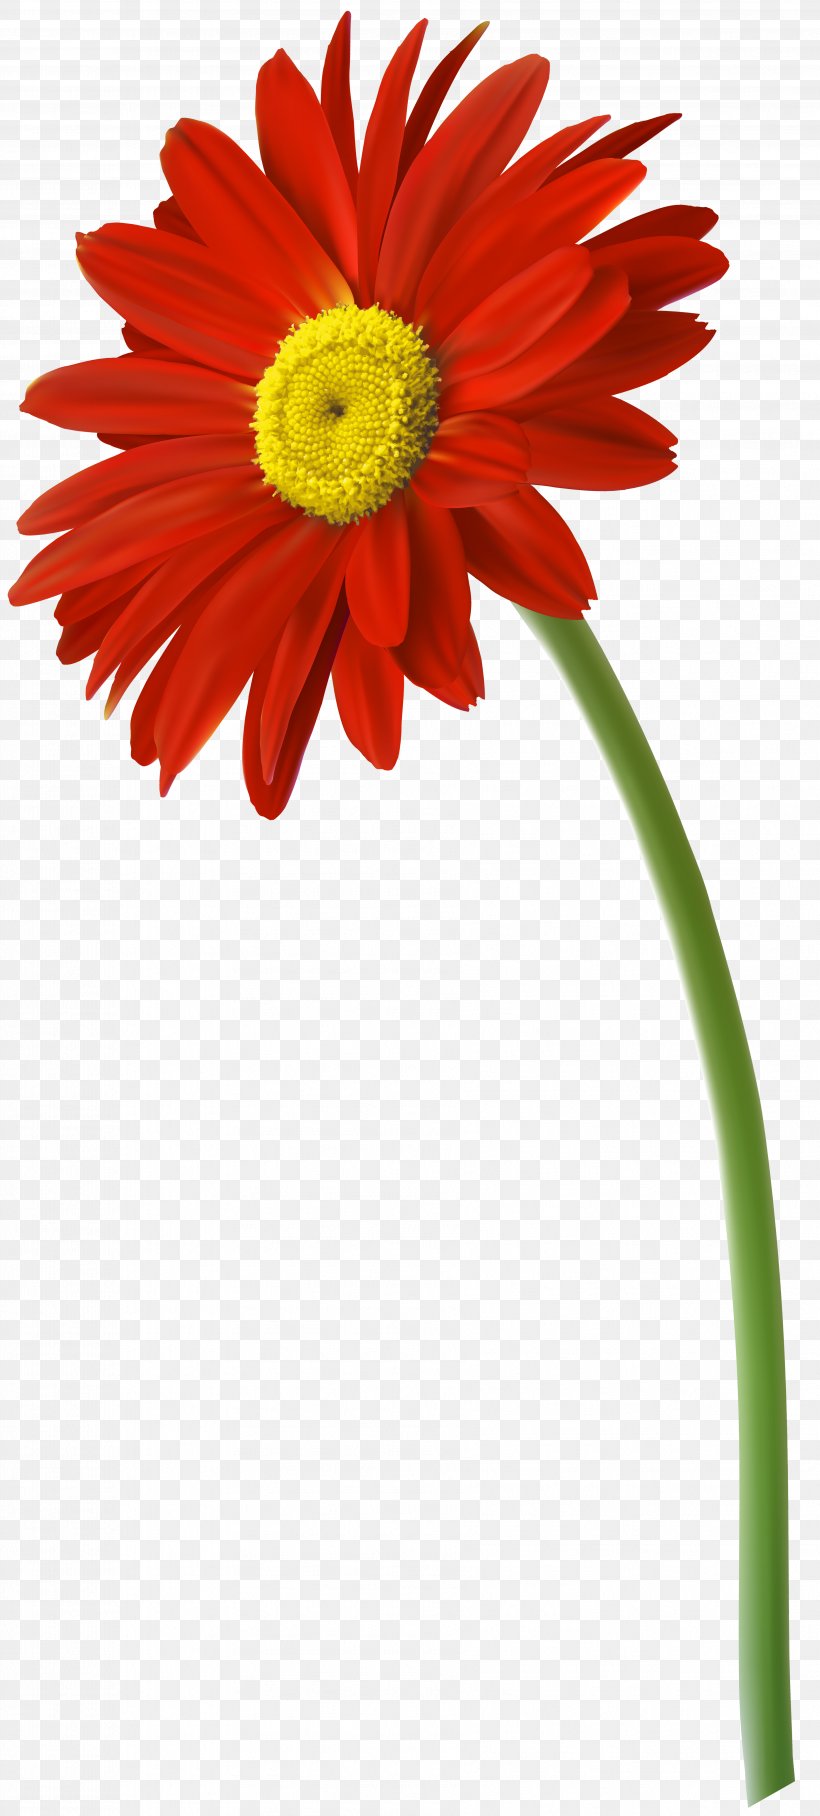 Flower Gerbera Jamesonii Clip Art, PNG, 3612x8000px, Flower, Chrysanths, Cut Flowers, Daisy, Daisy Family Download Free